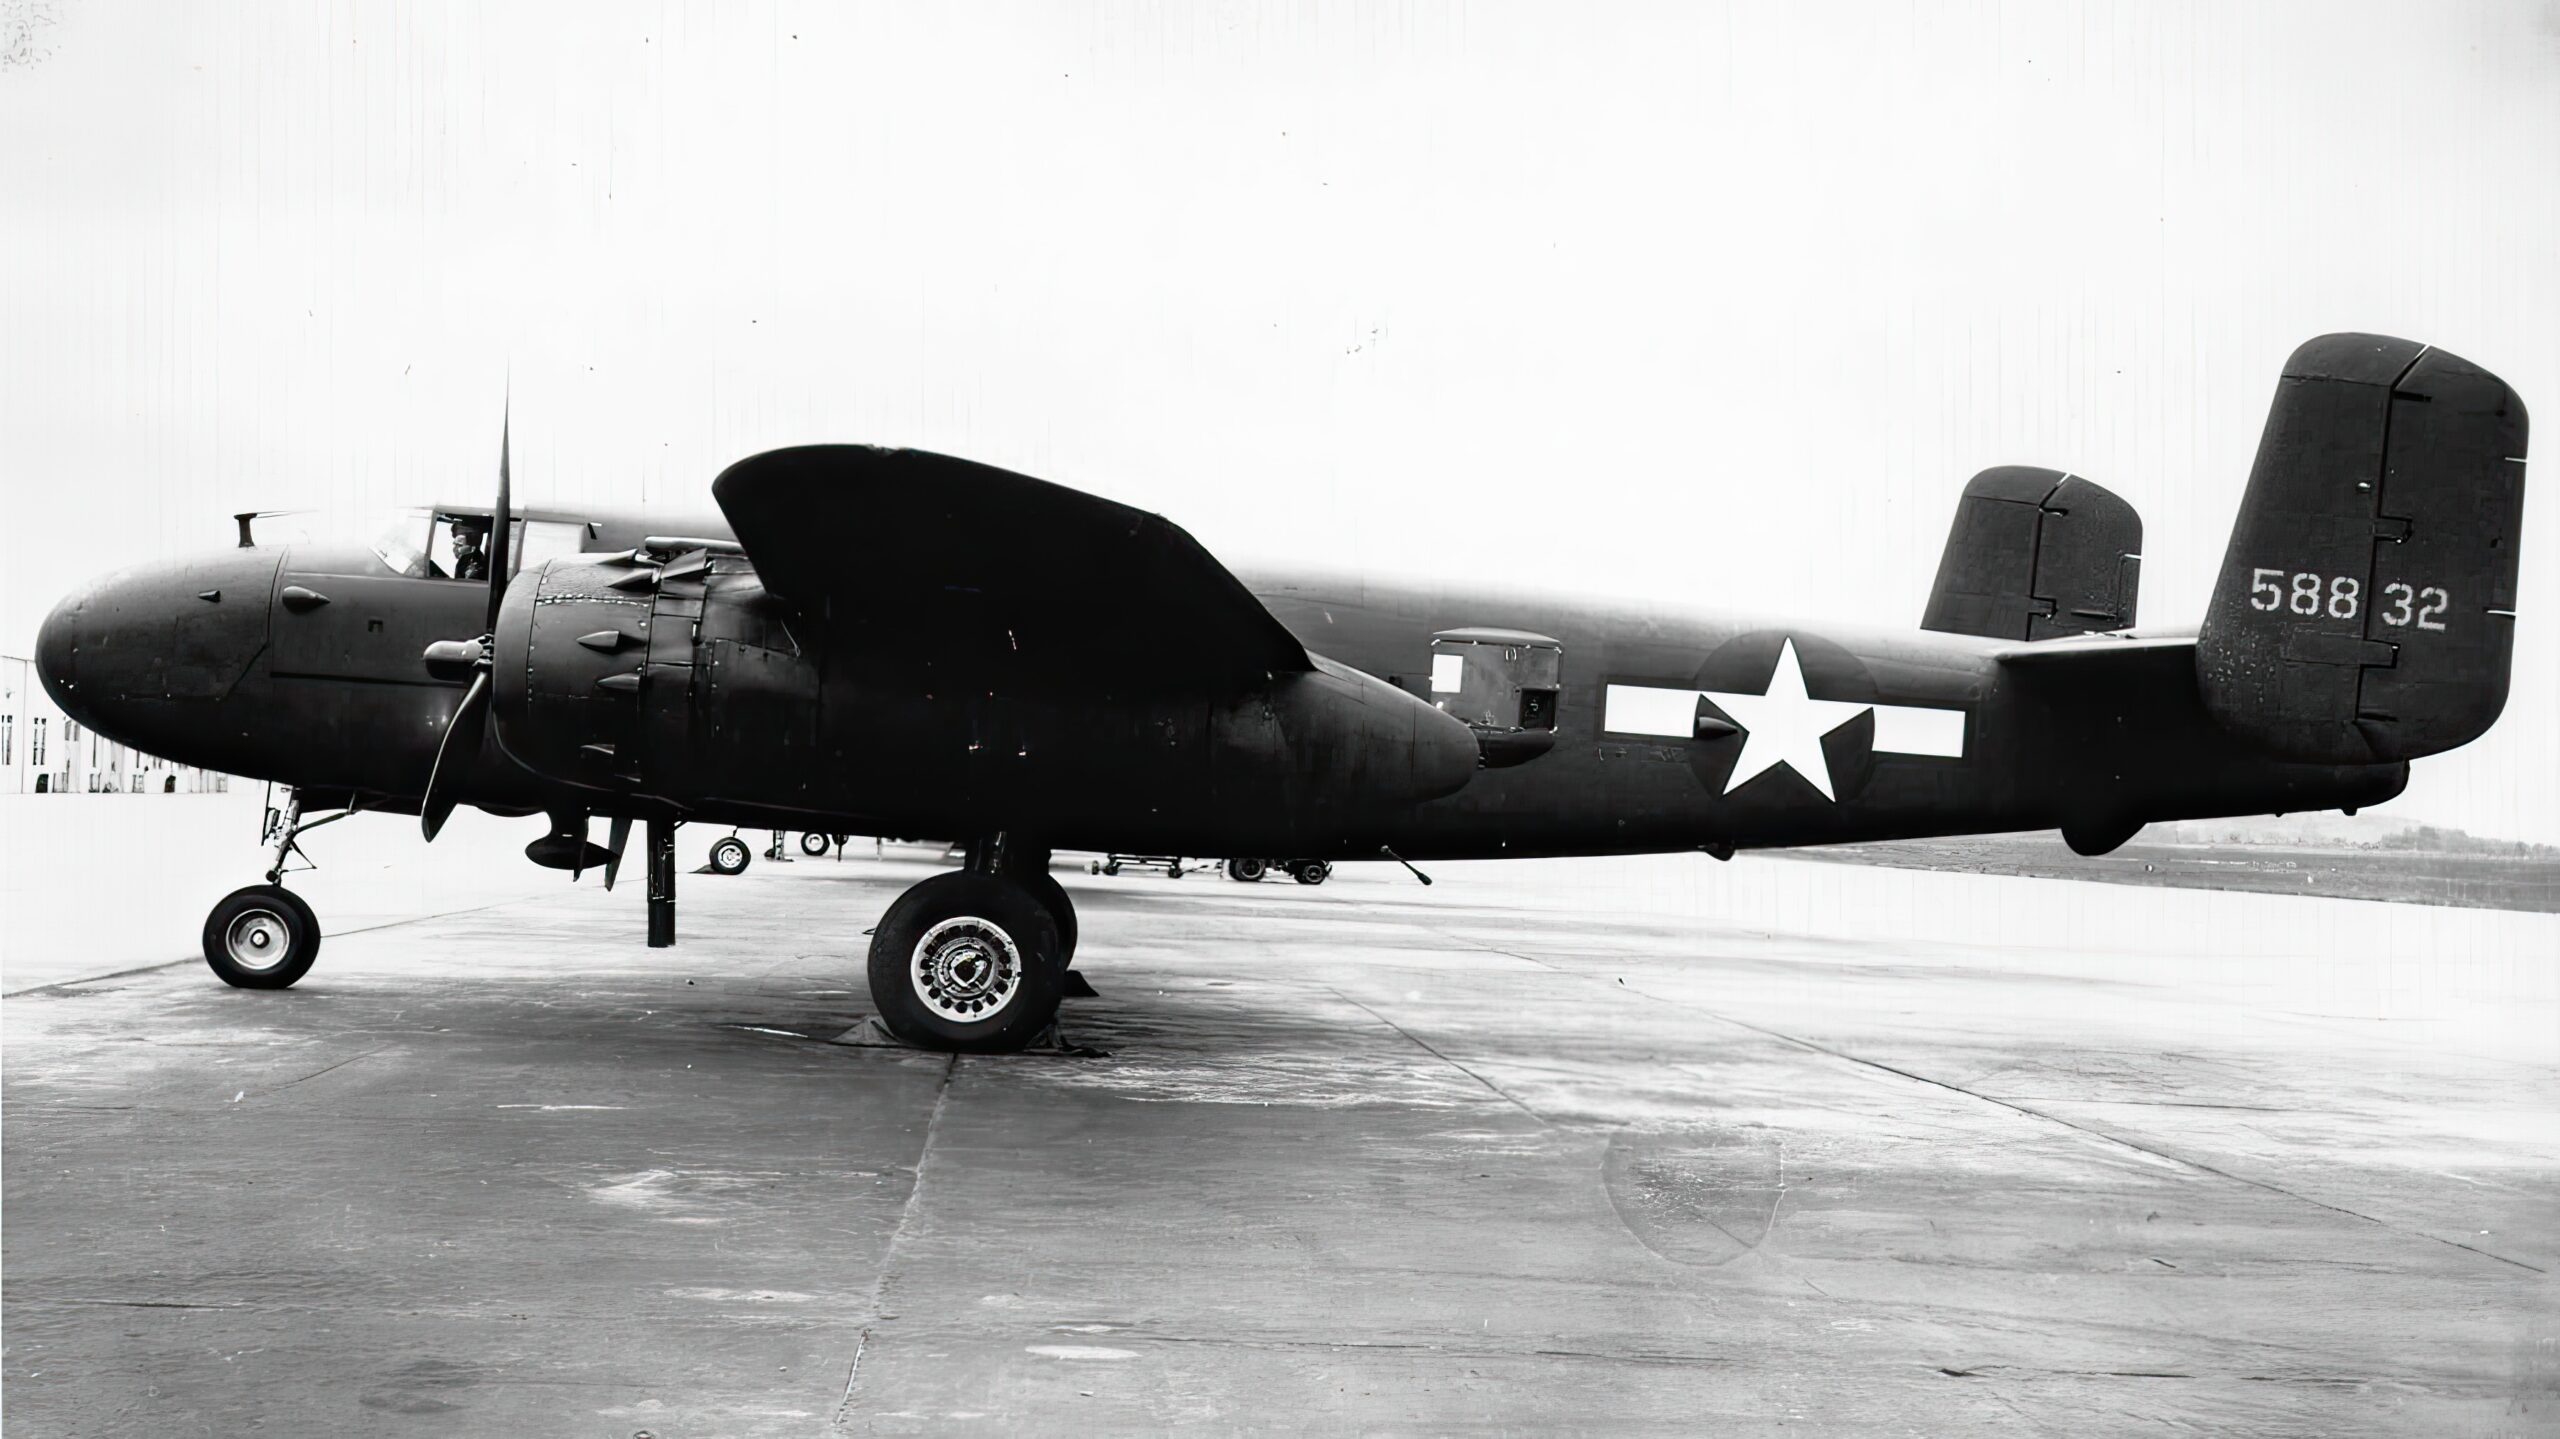 Late war development B-25J2 Mitchell strafer bomber